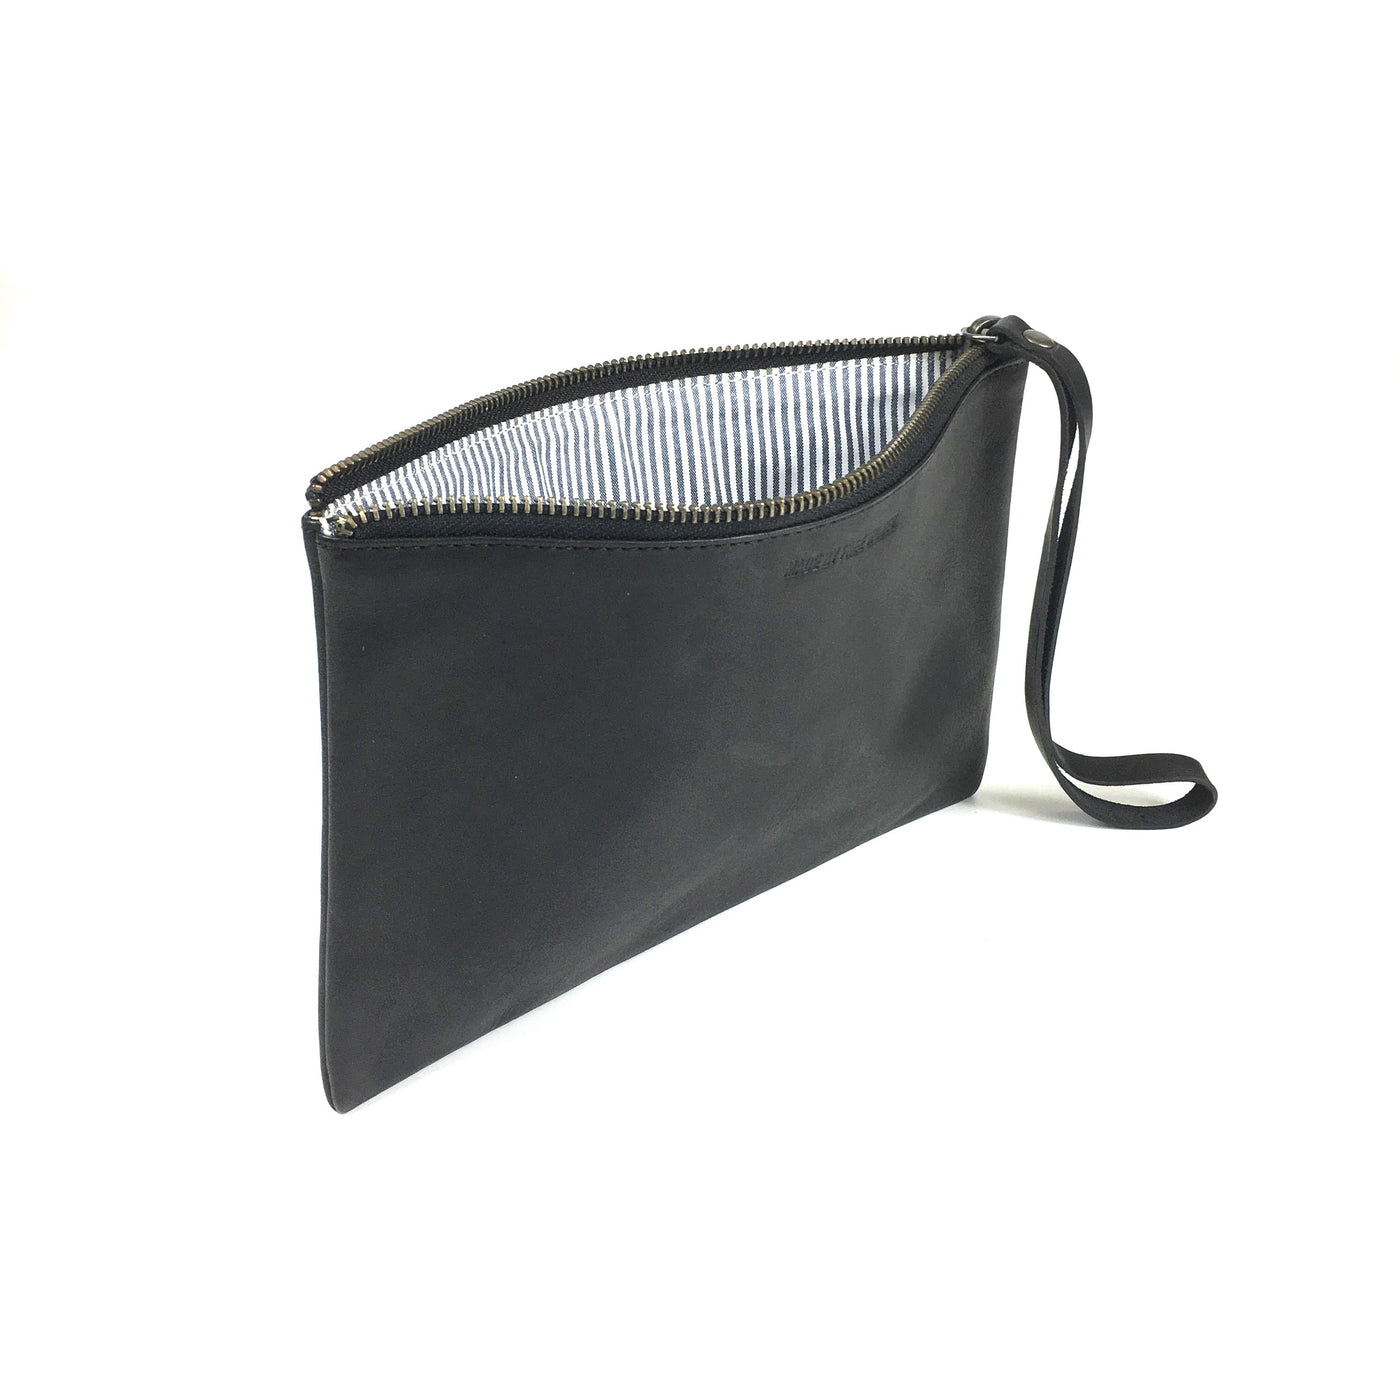 leather clutch pouch. vintage clutch purse. leather clutch purse. leather clutches for ladies. leather clutch bag.